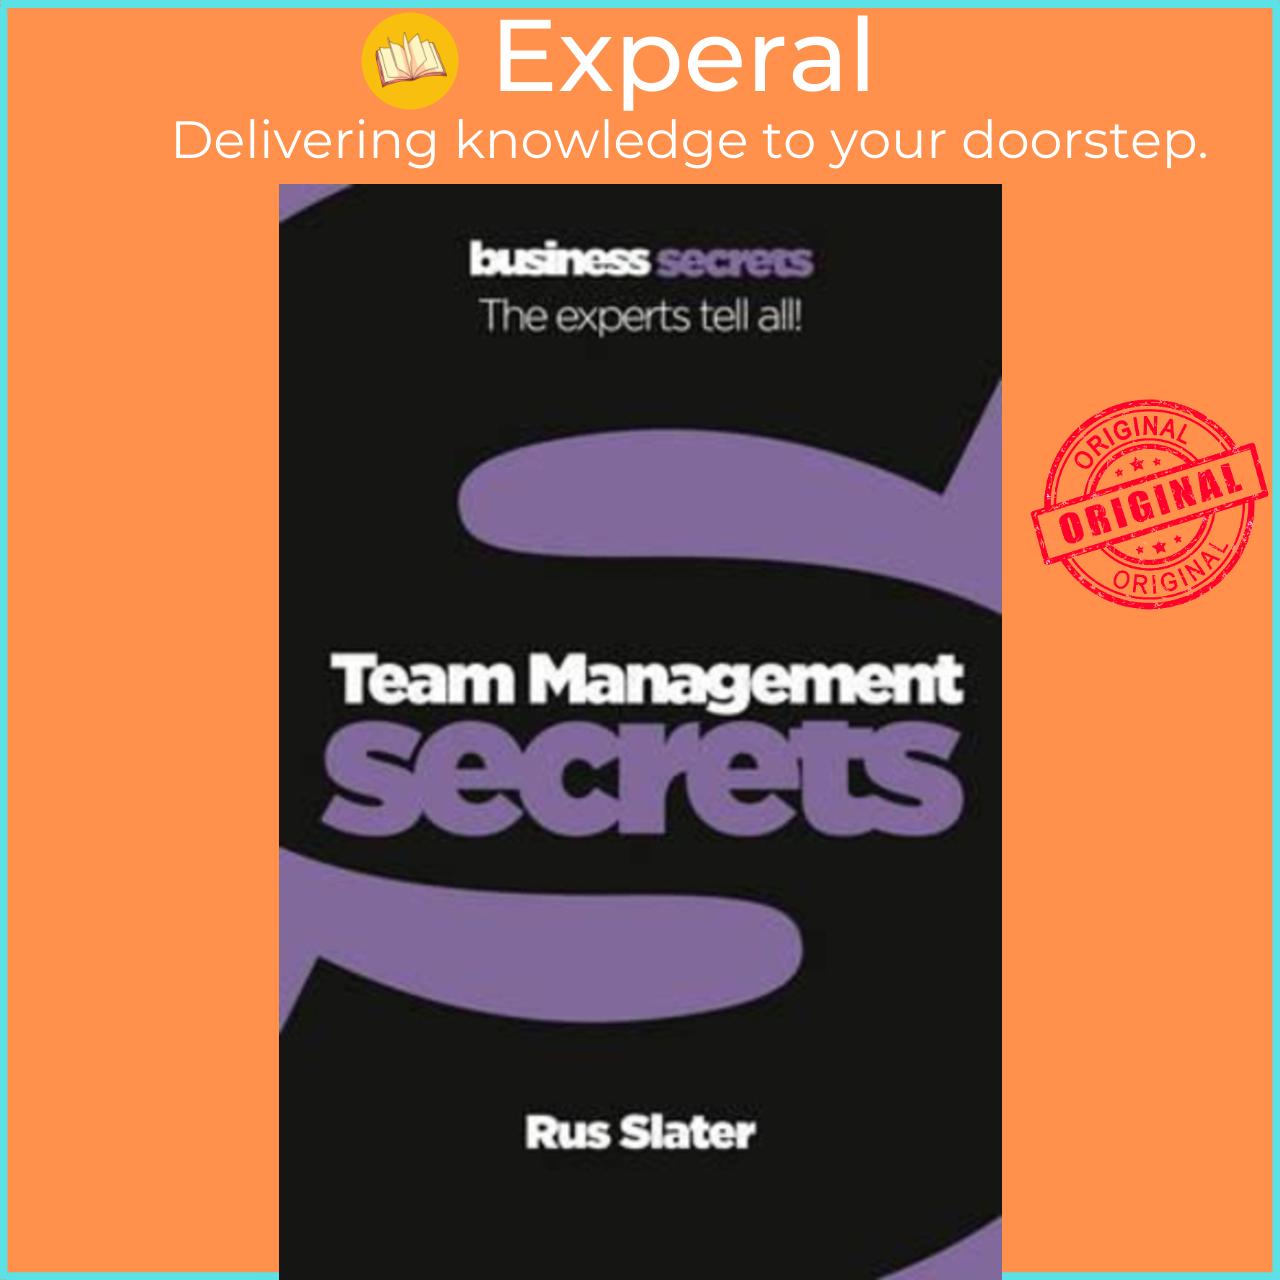 Sách - Team Management (Collins Business Secrets) by Rus Slater (UK edition, paperback)